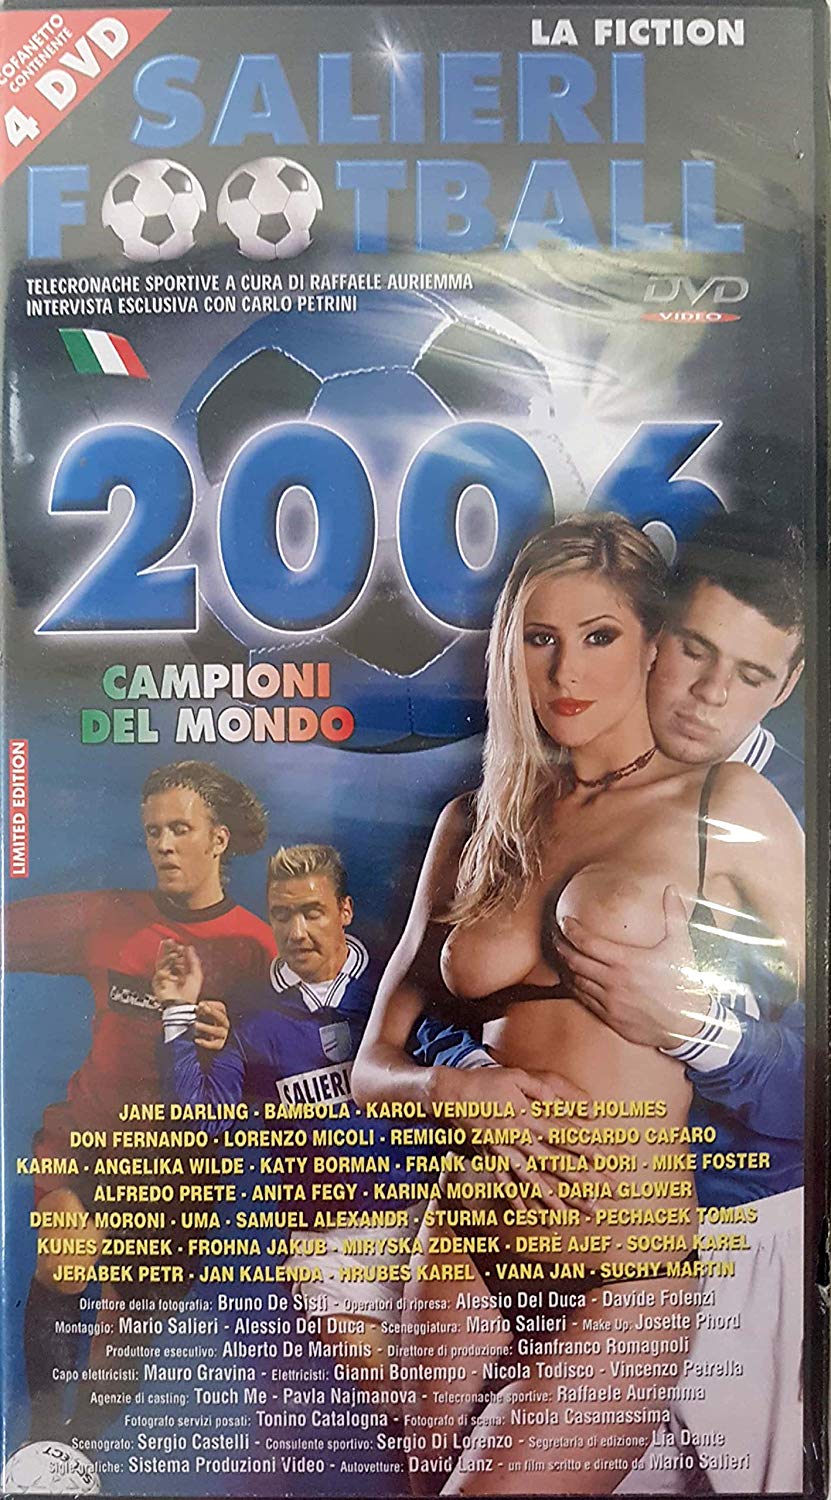 Salieri football 2006 - la Fiction - 4 DVD - ErosDvd.it foto Immagine